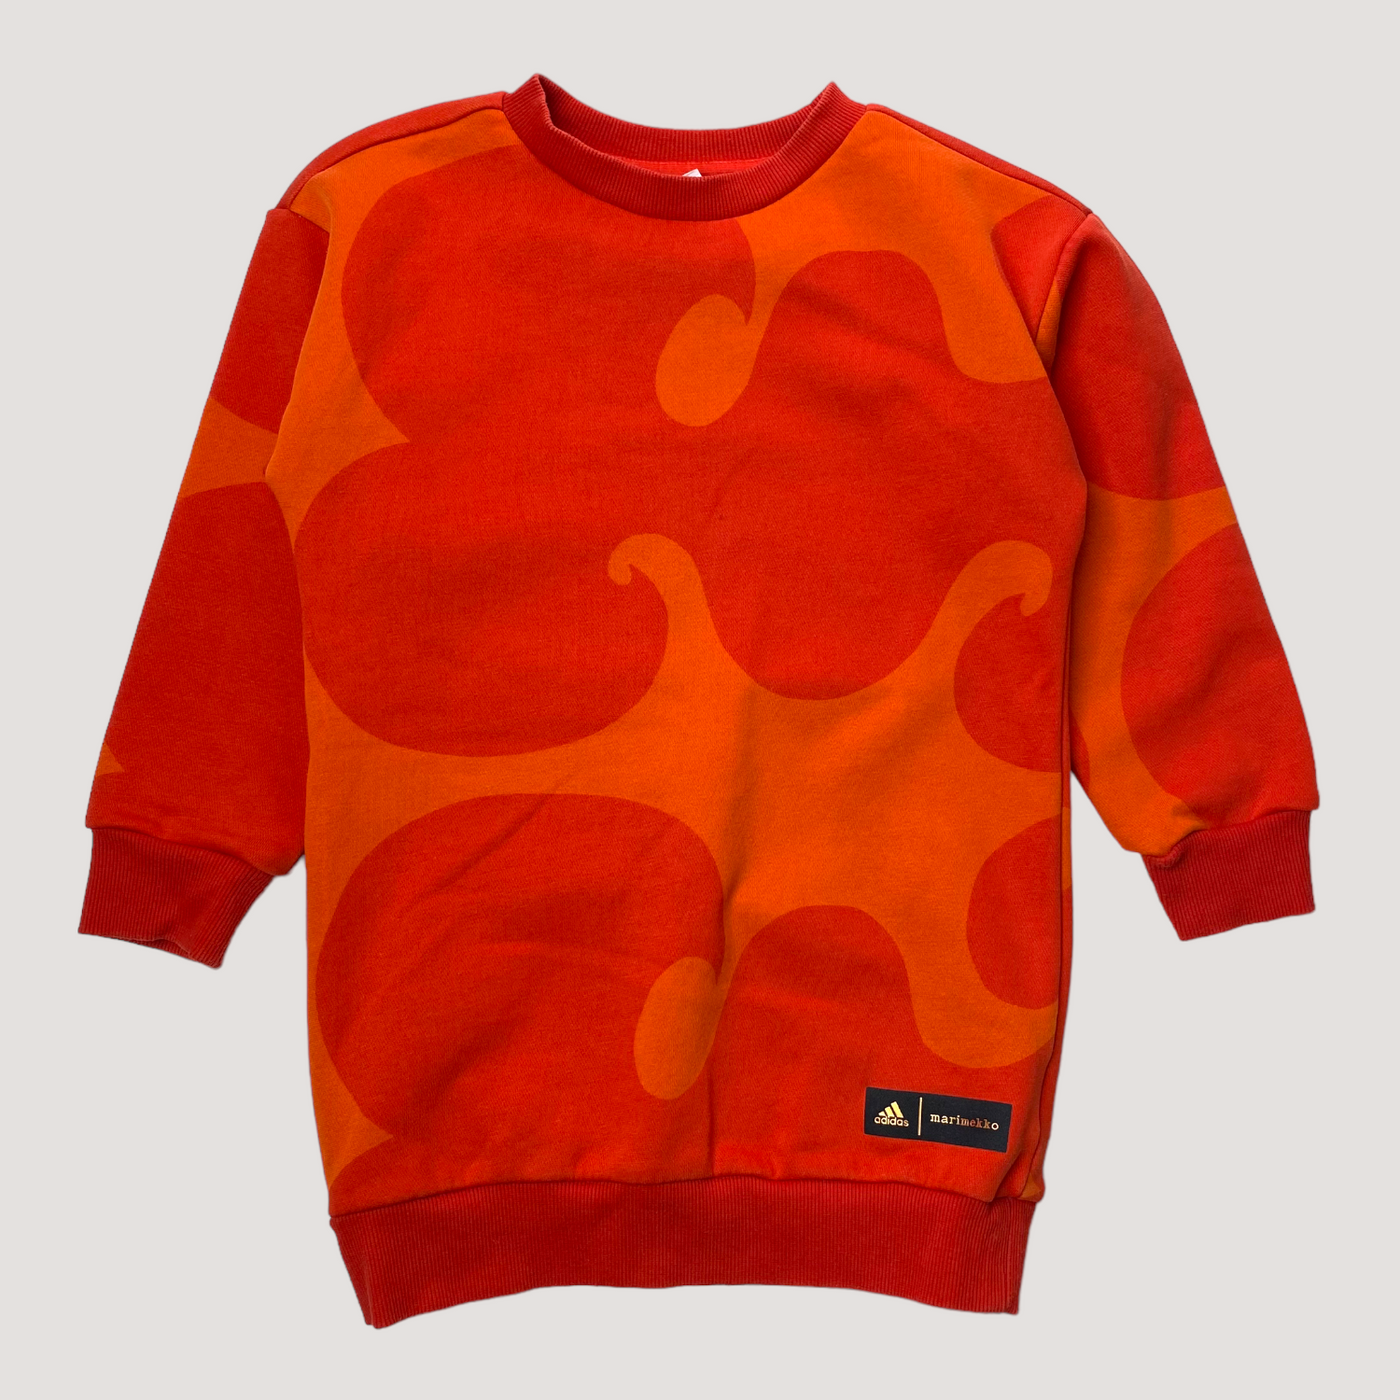 Marimekko x Adidas sweat dress, red/orange | 5-6y